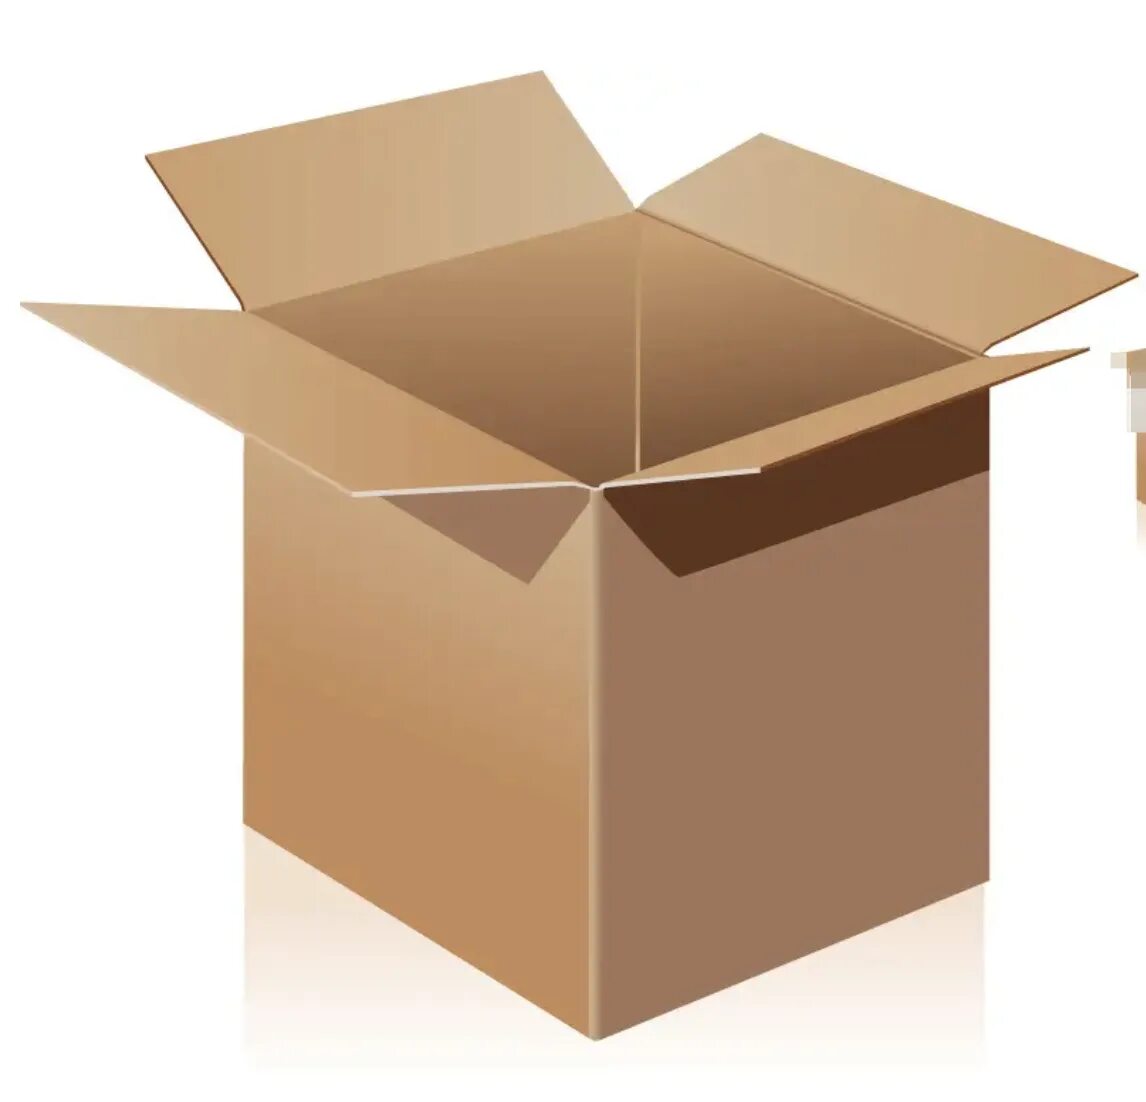 Картинки коробок. Открытая коробка. Коробка без фона. Открытая картонная коробка. Распакованные коробки.